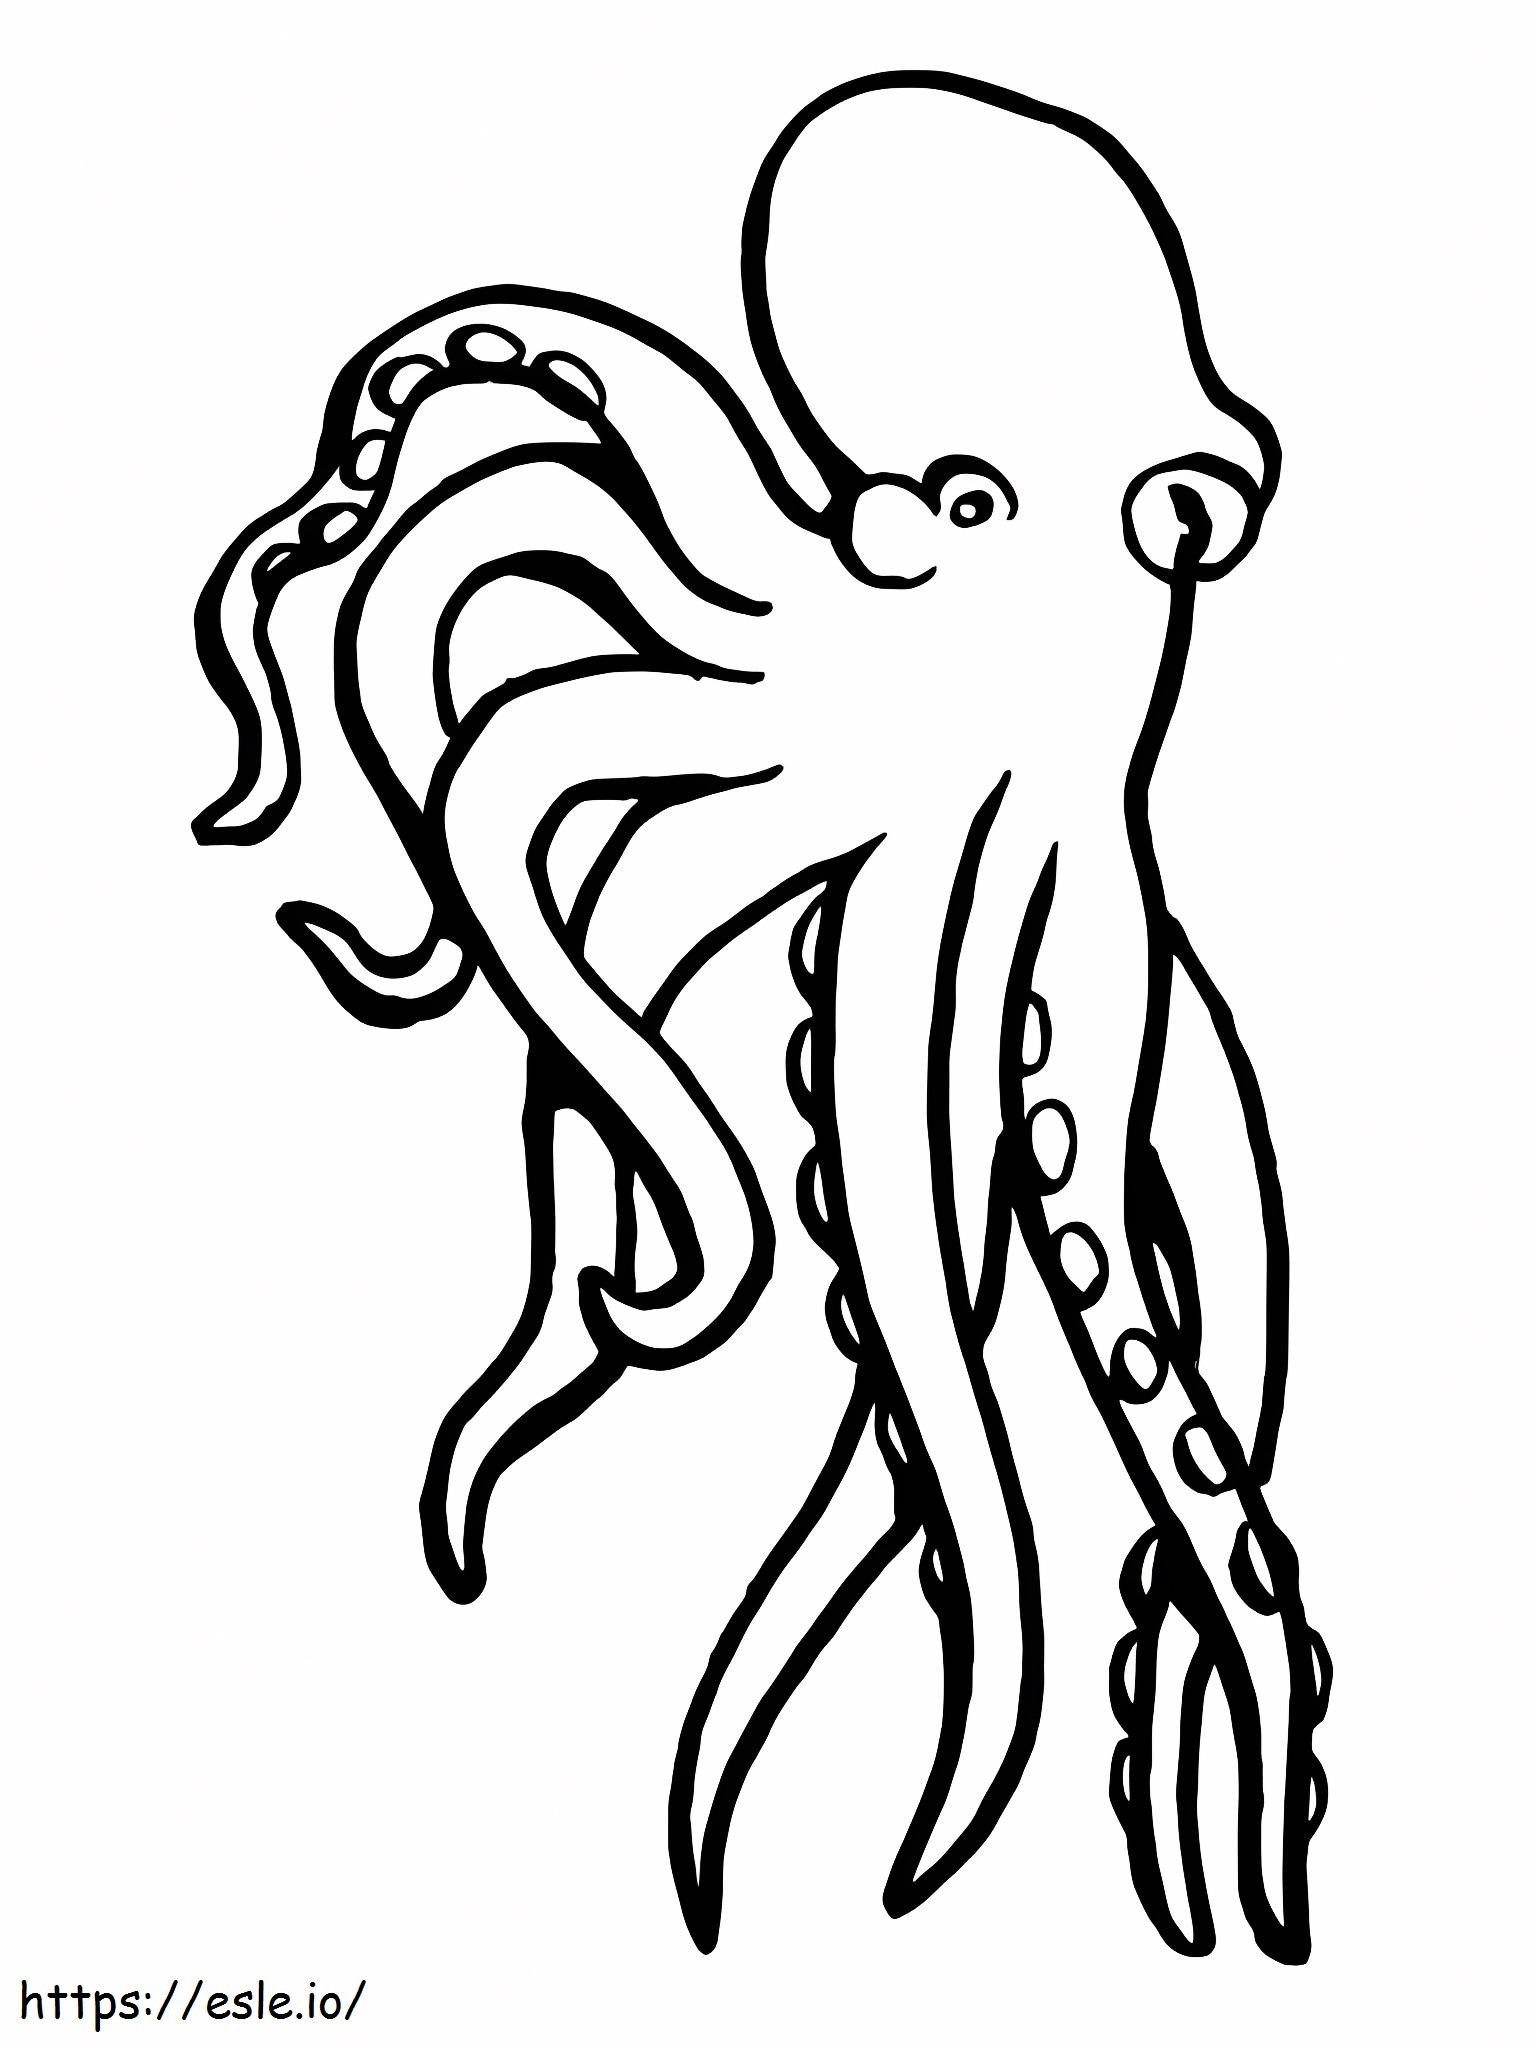 Octopus Mollusk coloring page